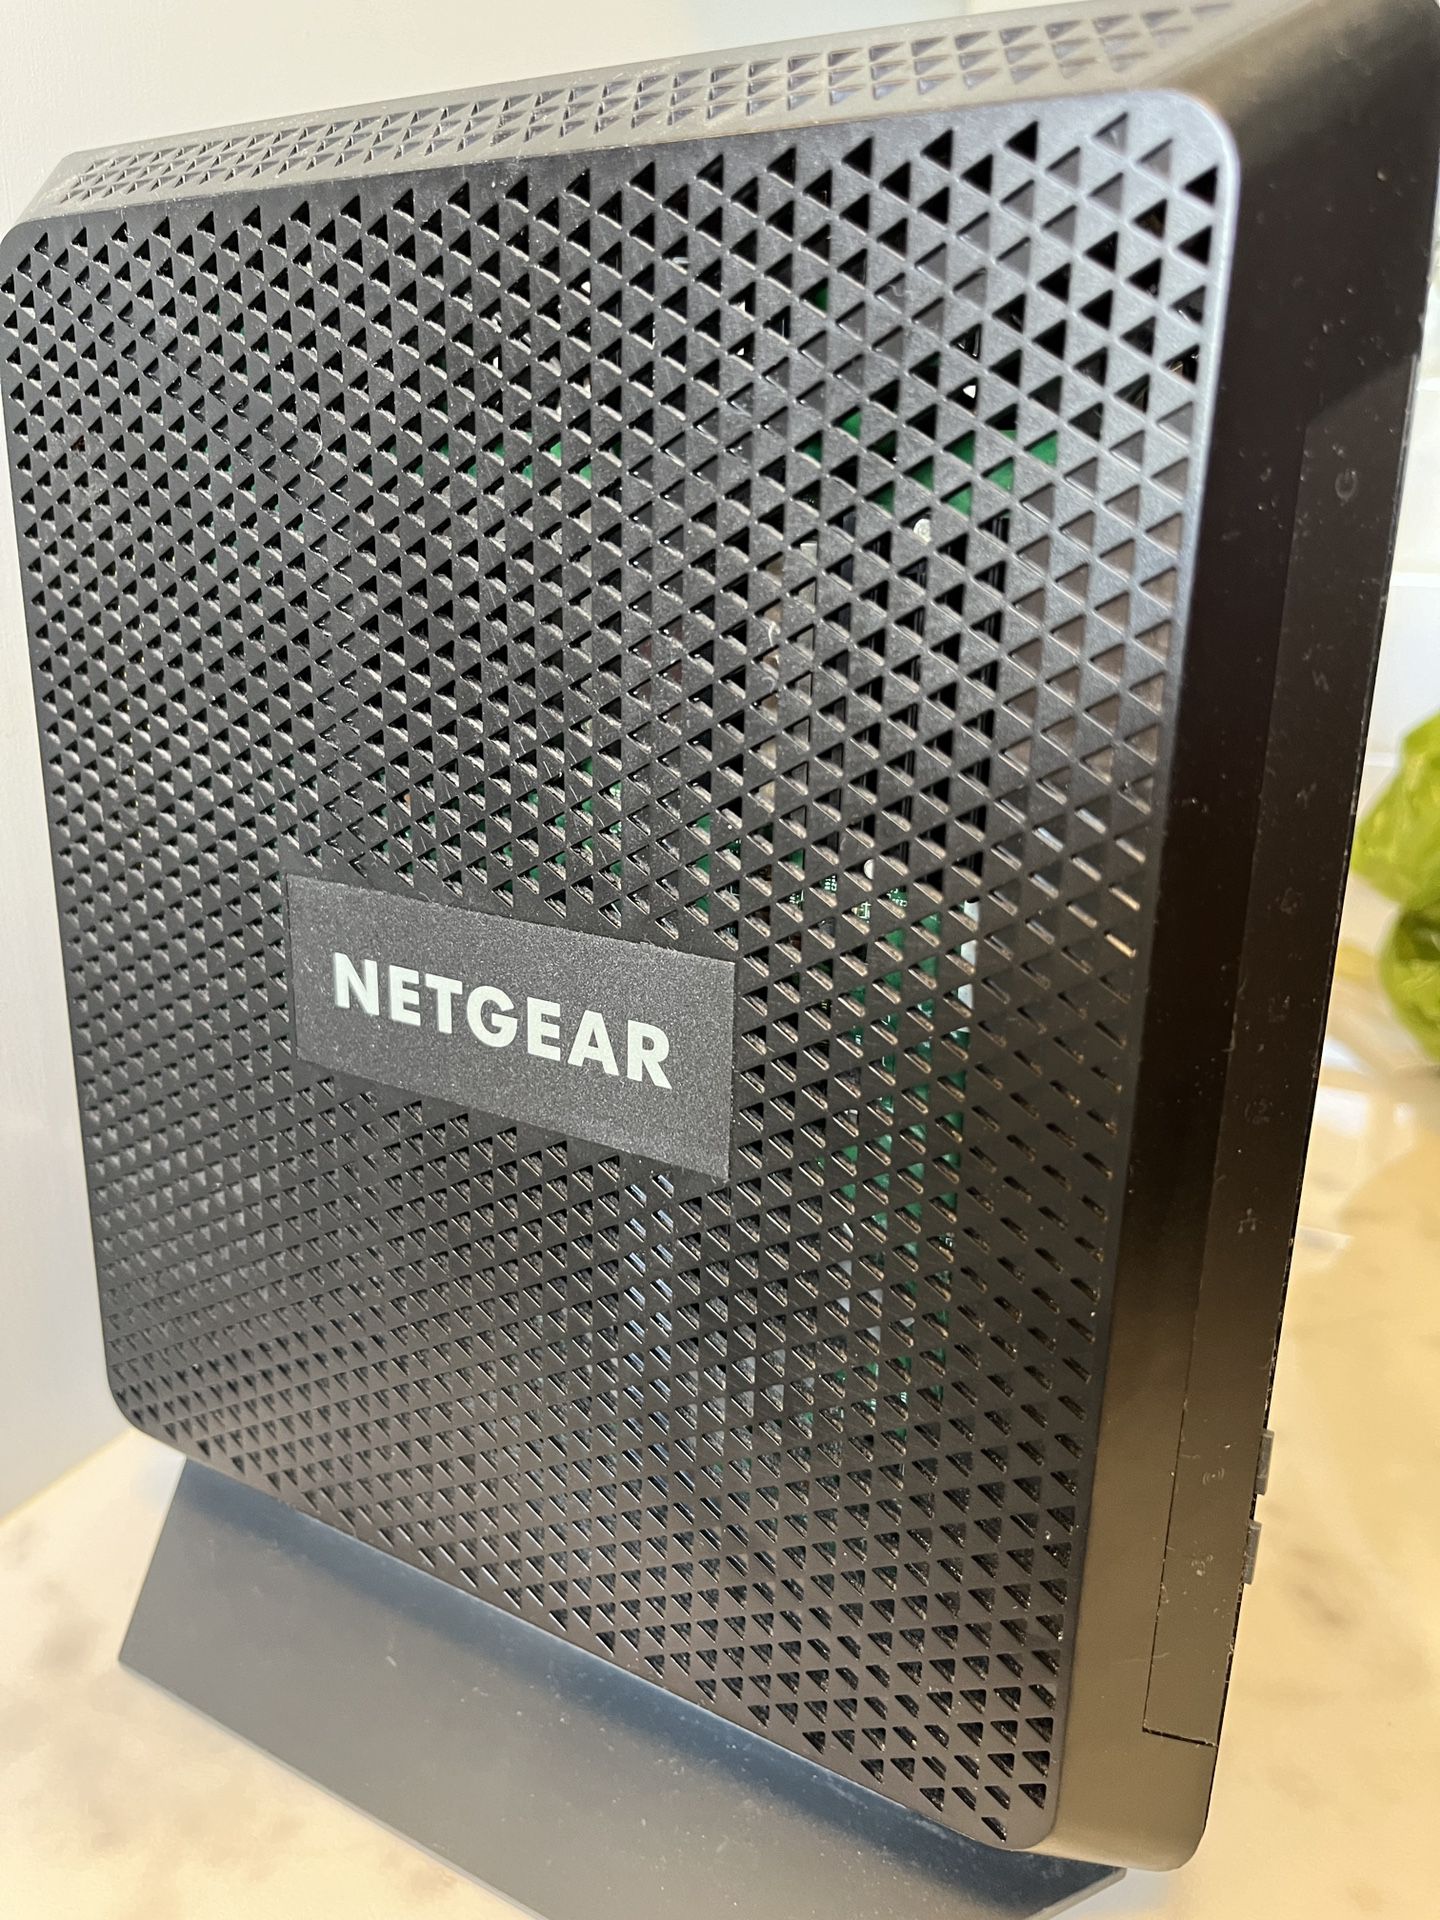 Netgear Nighthawk AC1900 Cable Modem & Wi-Fi Router